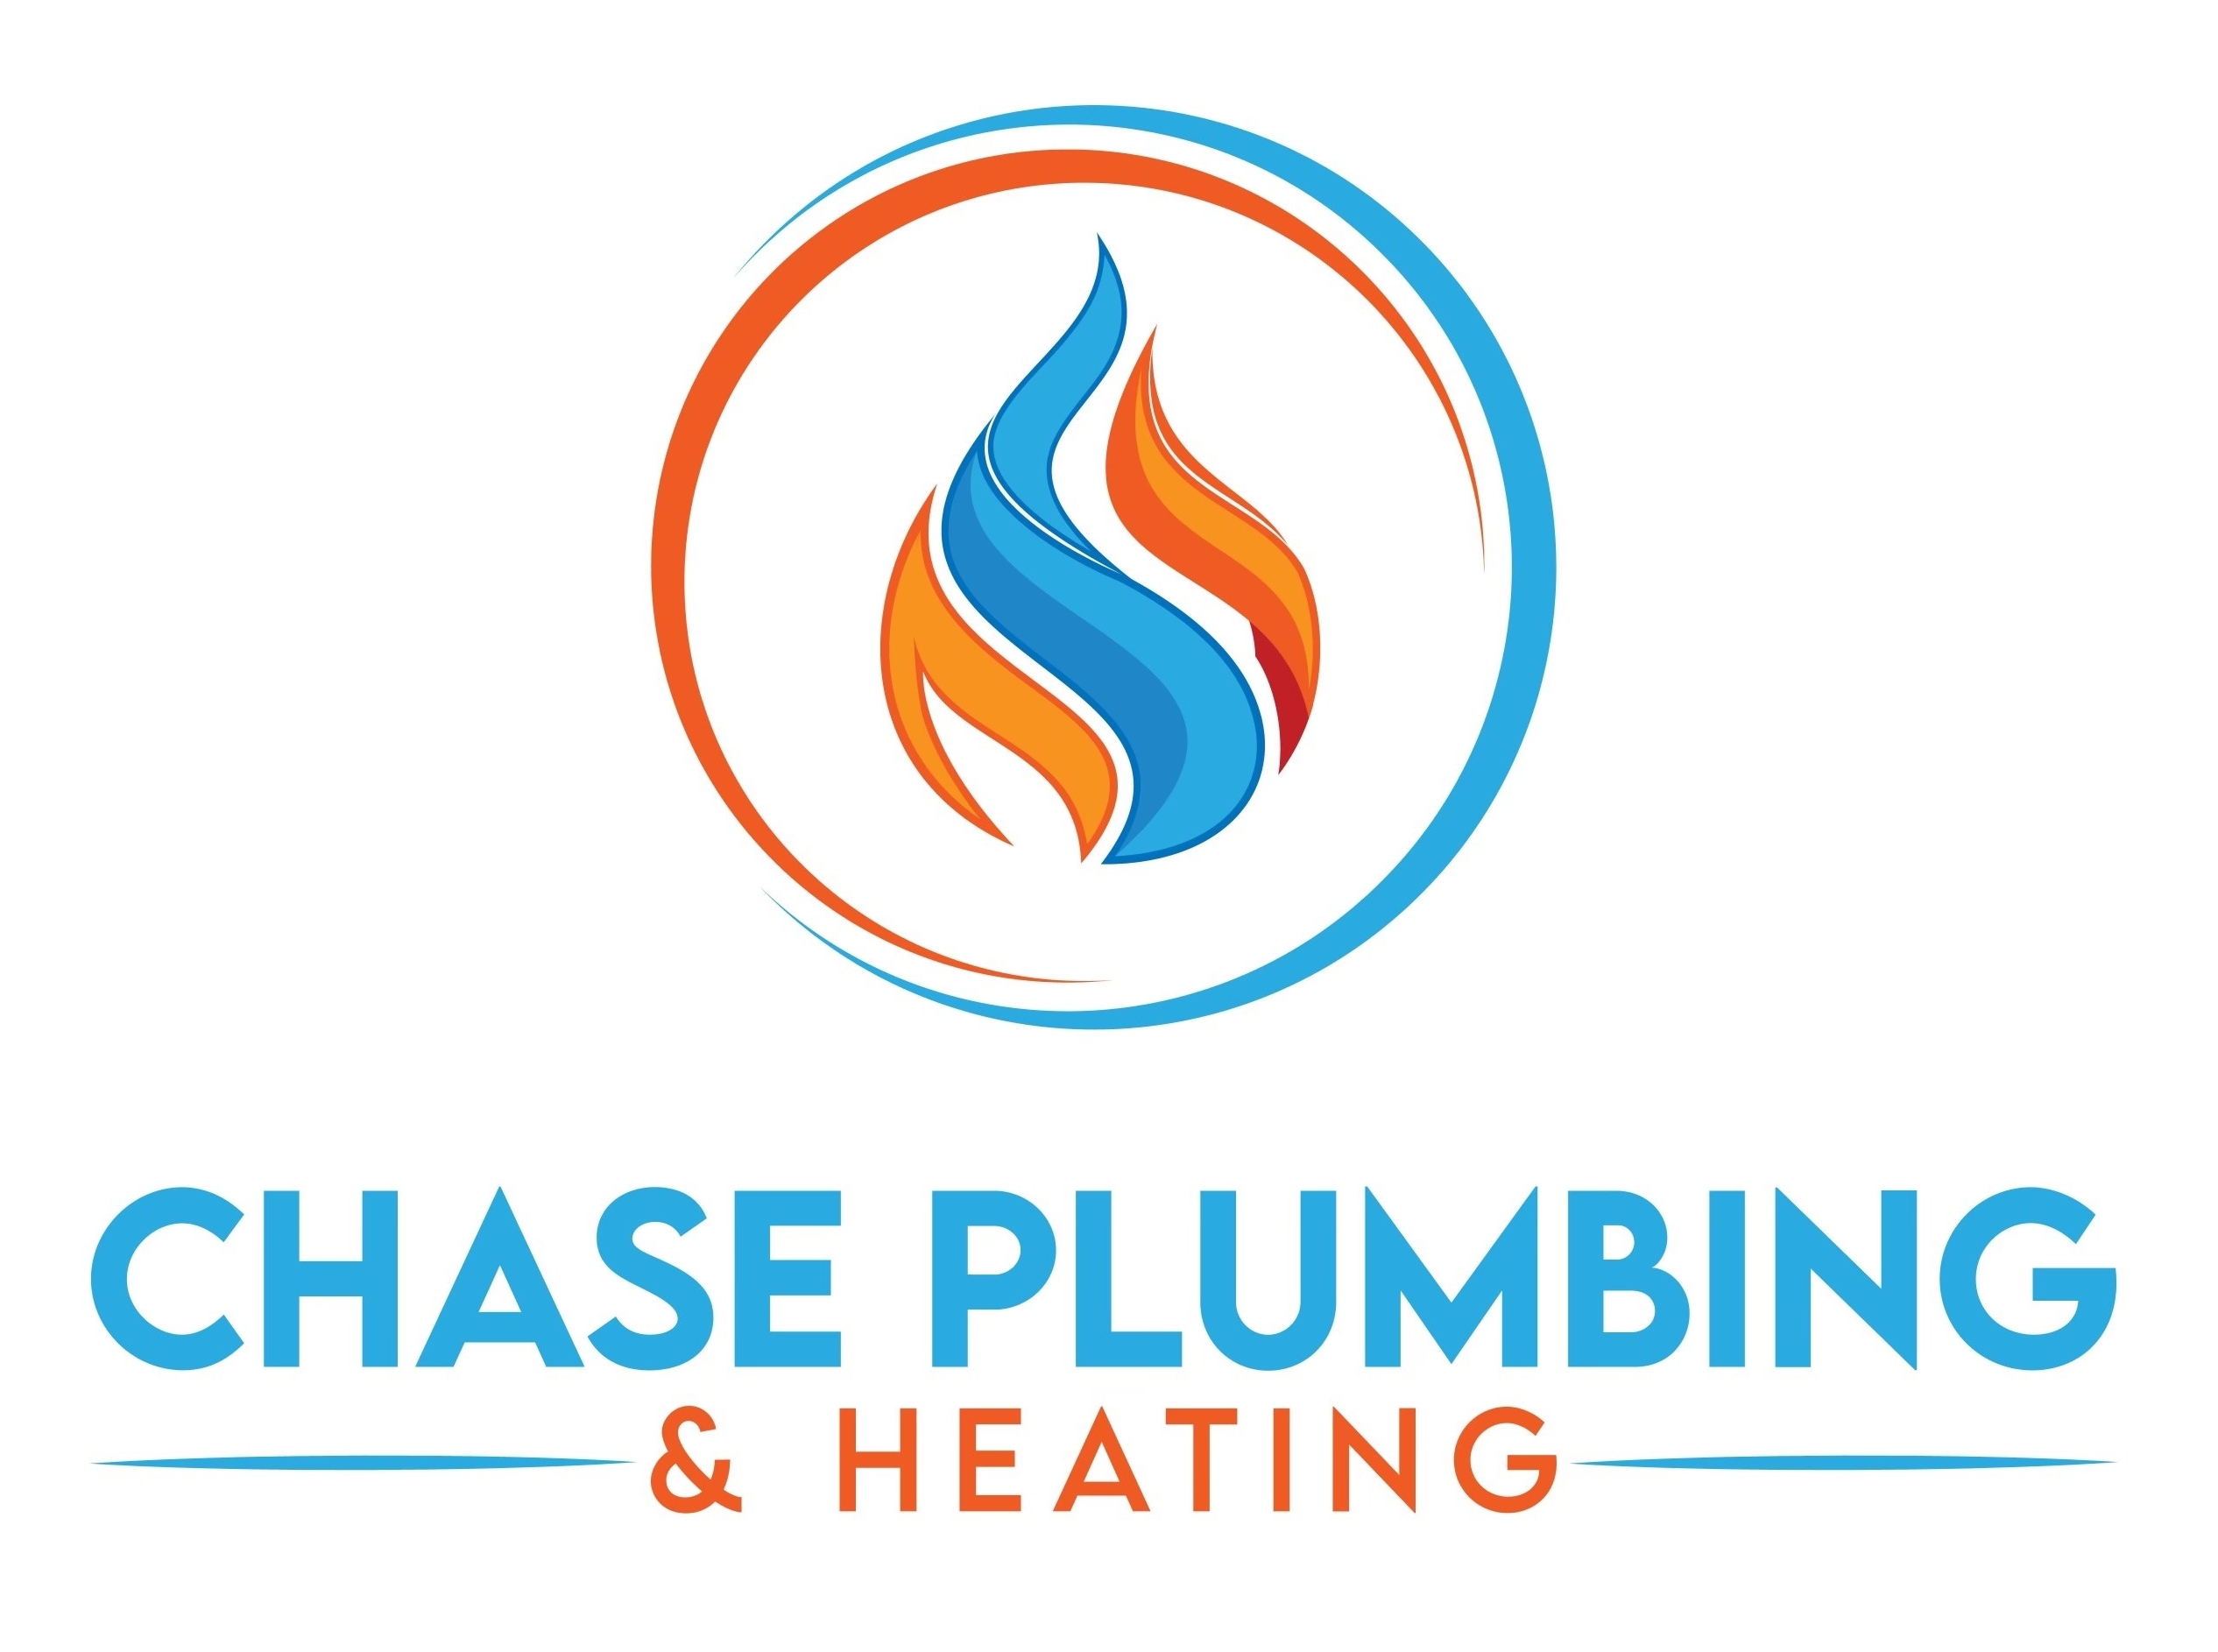 Chase Plumbing & Heating's logo